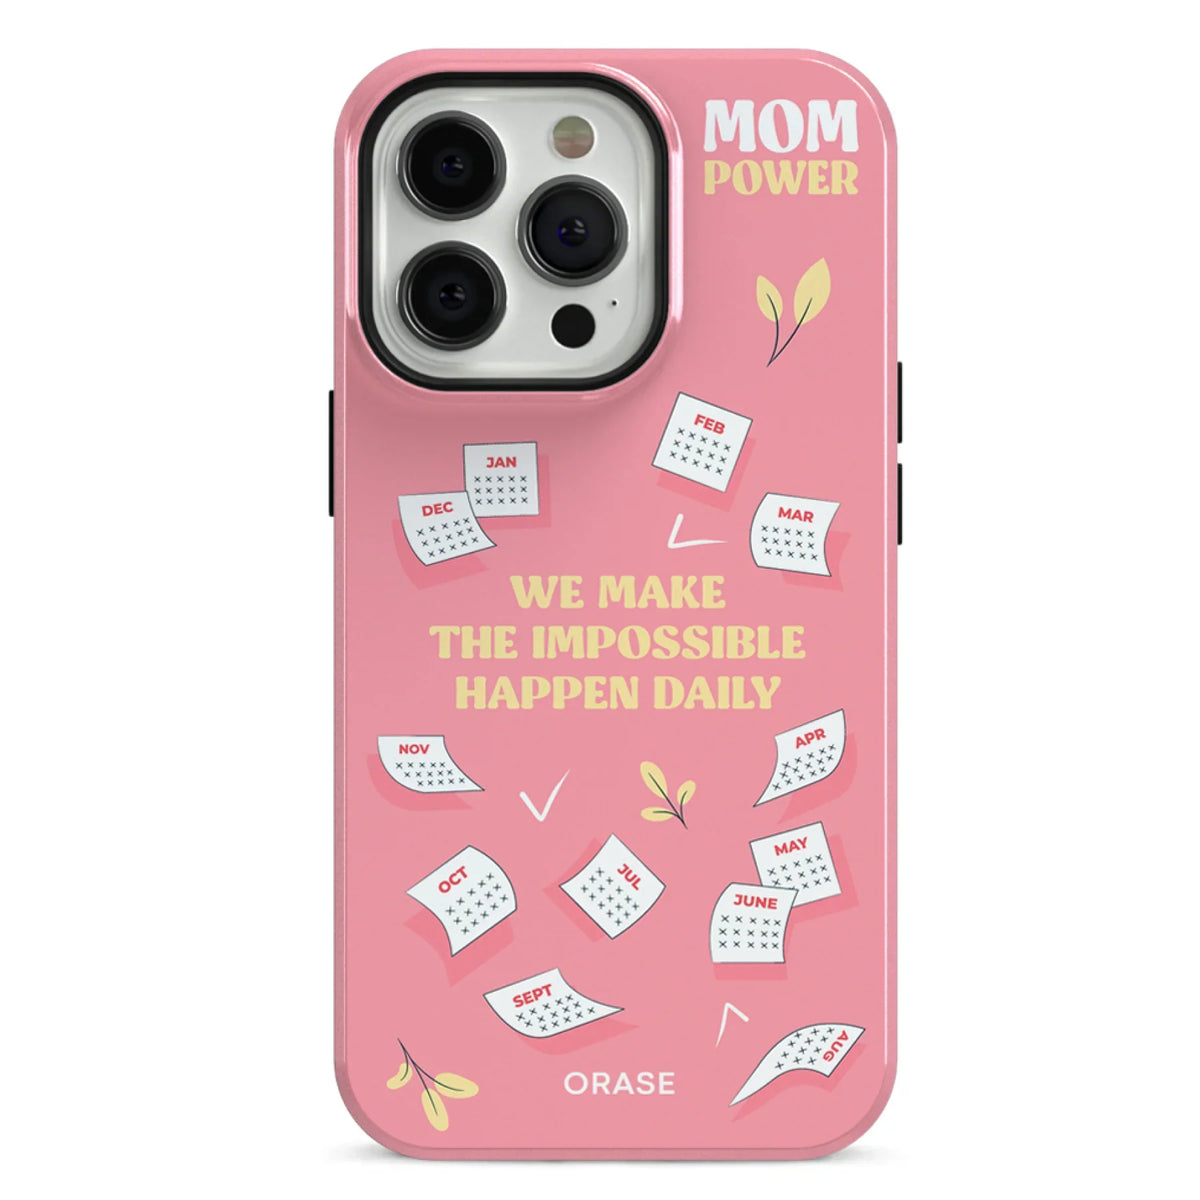 Mom Power iPhone Case - iPhone 11